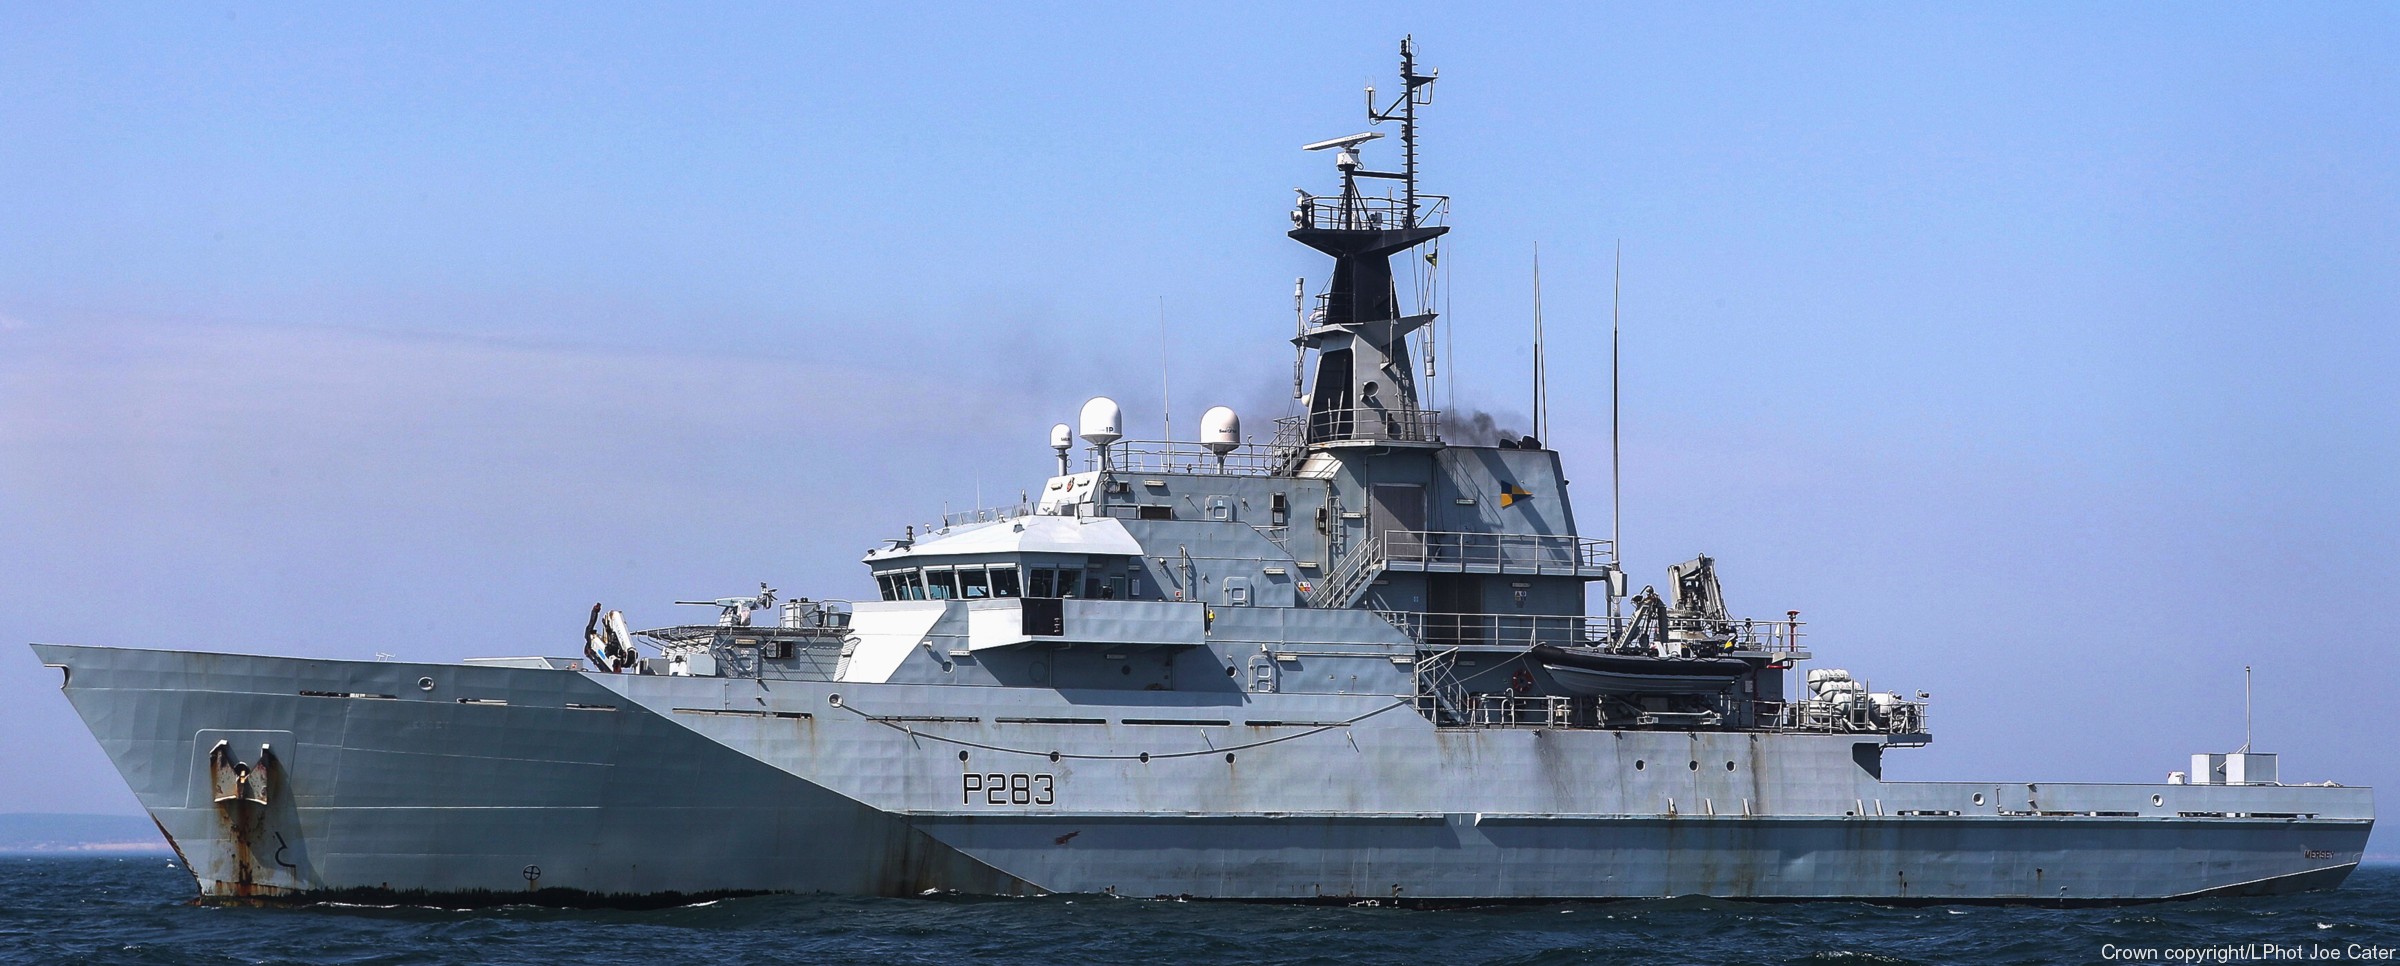 p-283 hms mersey river class offshore patrol vessel opv royal navy 02